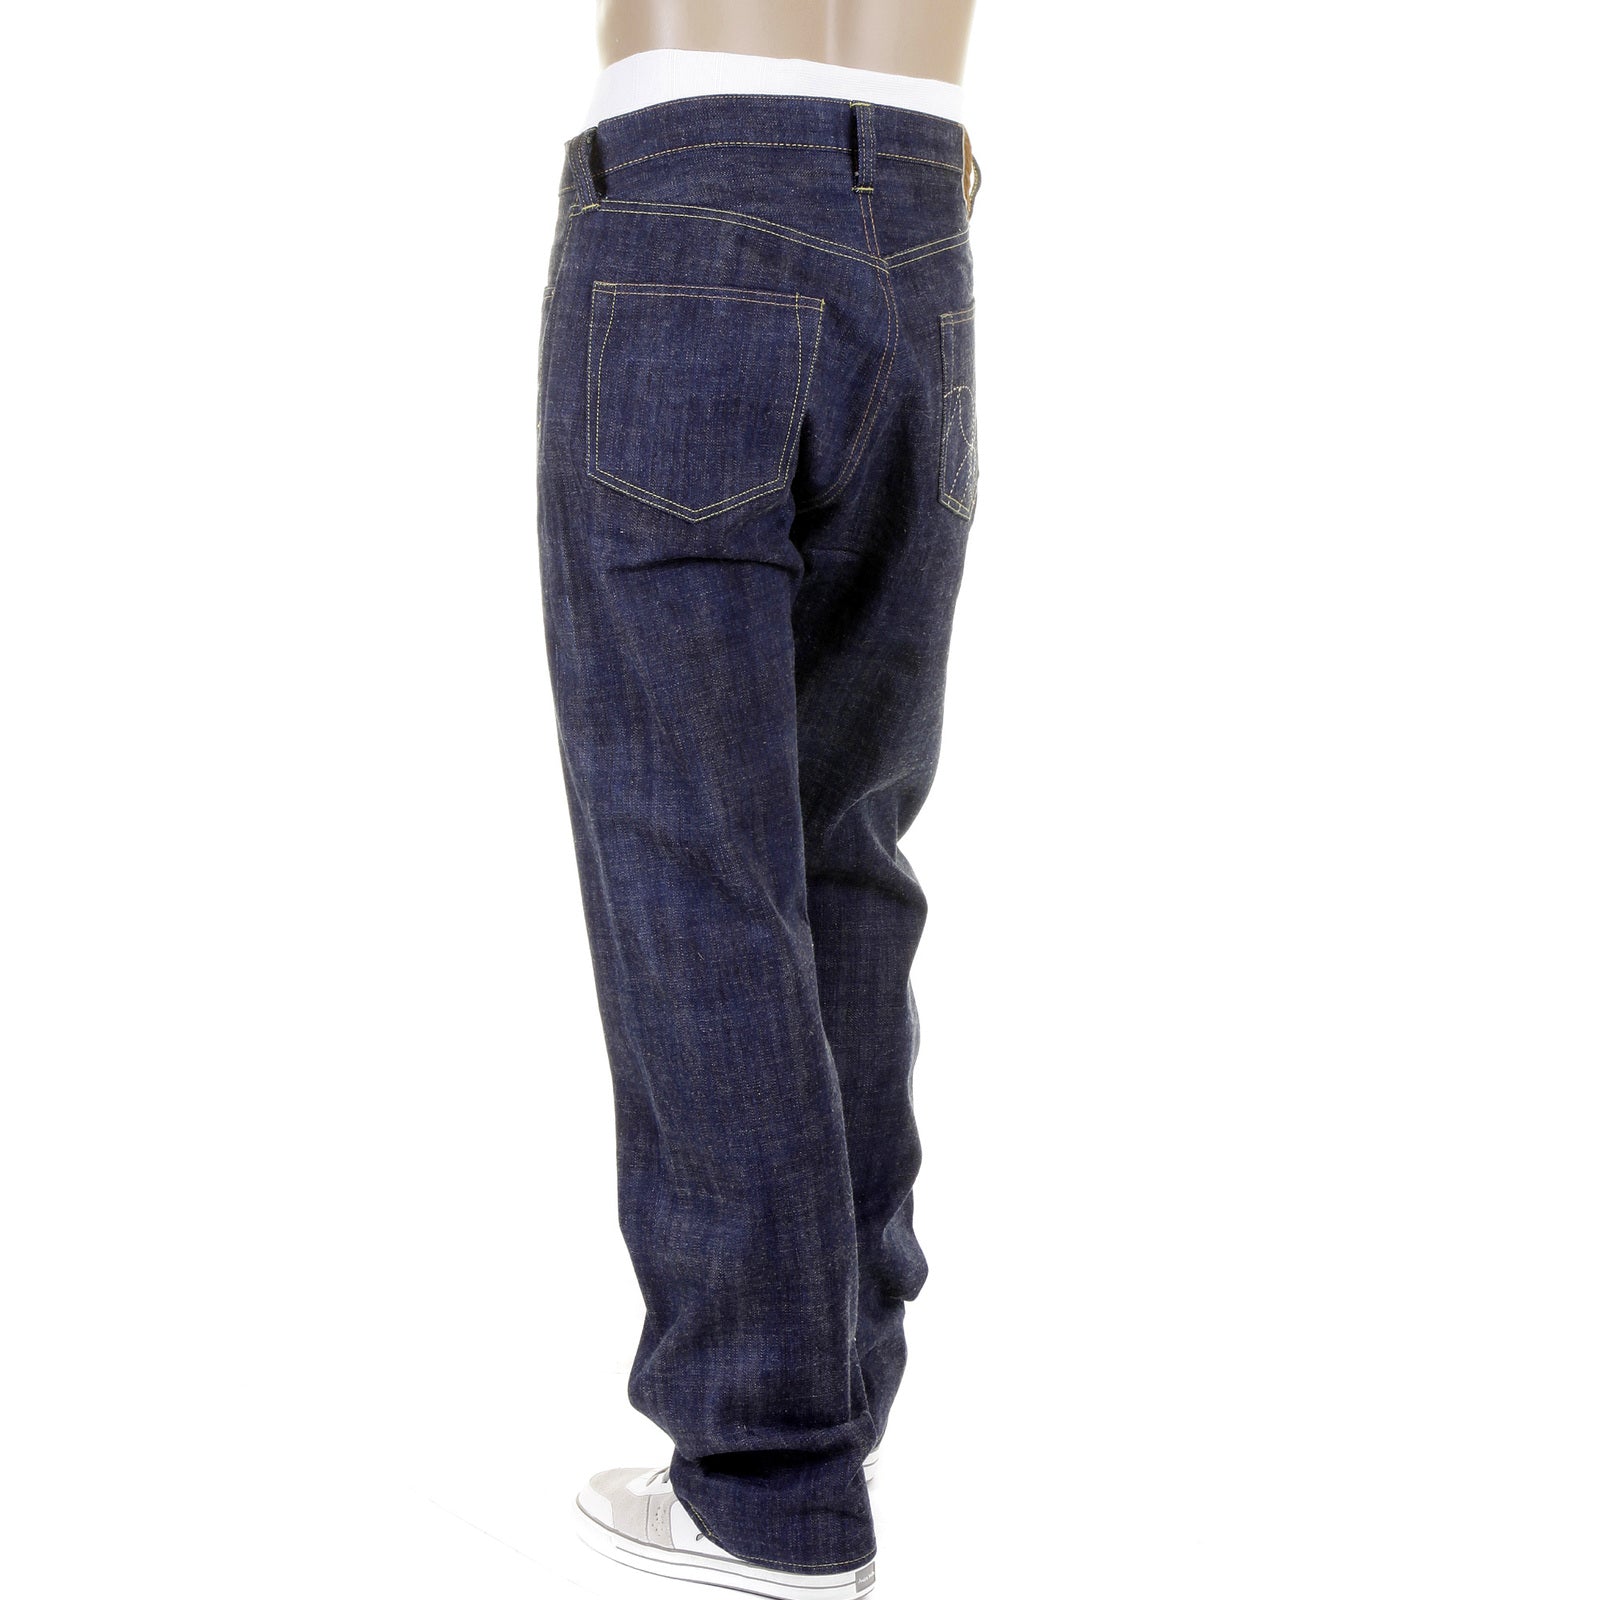 A.P.C. New Standard Selvedge Japanese Raw Denim Jeans Indigo 33 APC | eBay